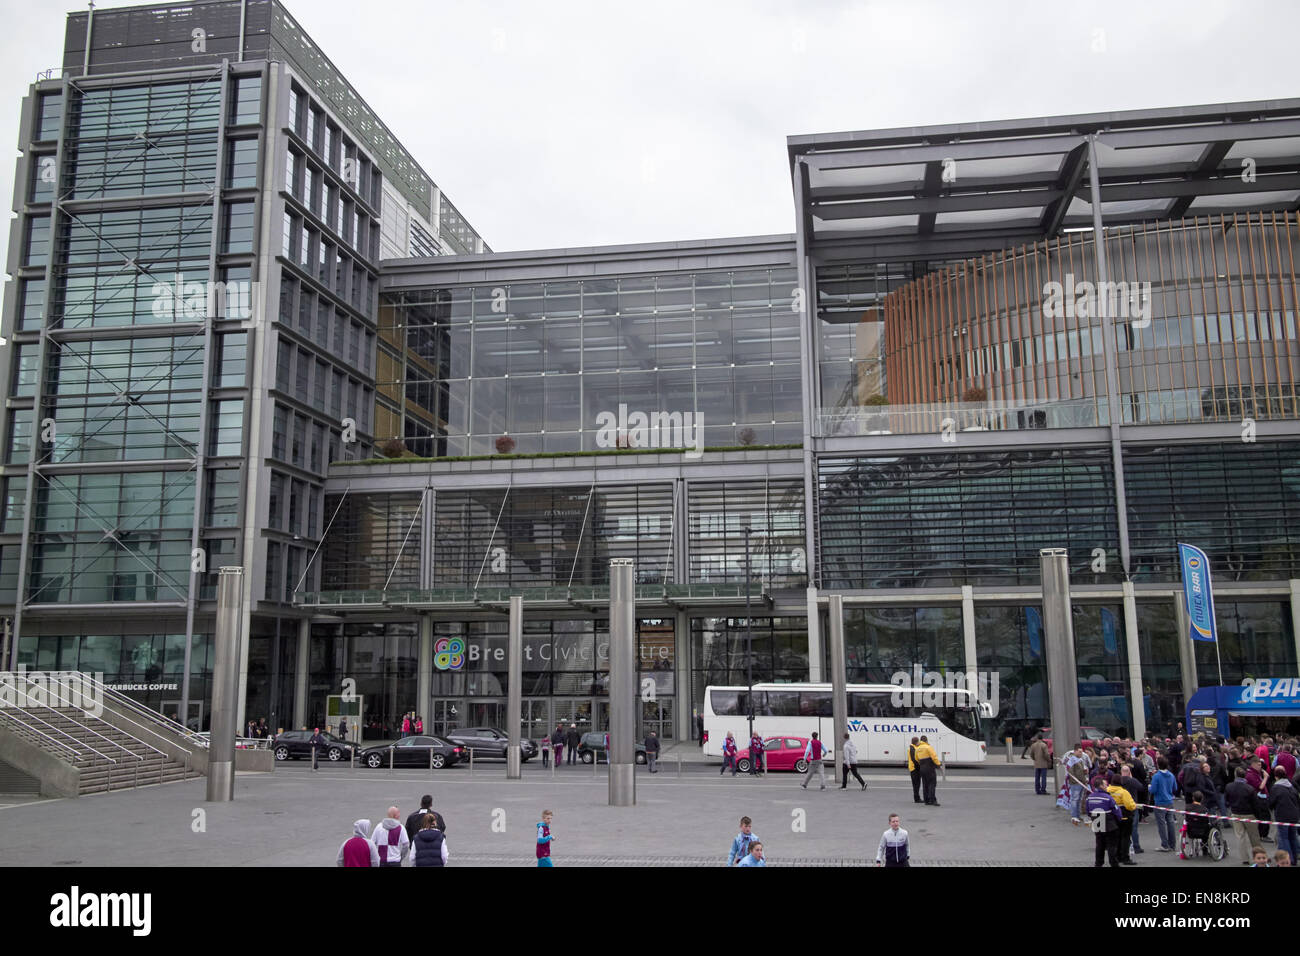 Brent civic centre Wembley, London UK Stockfoto